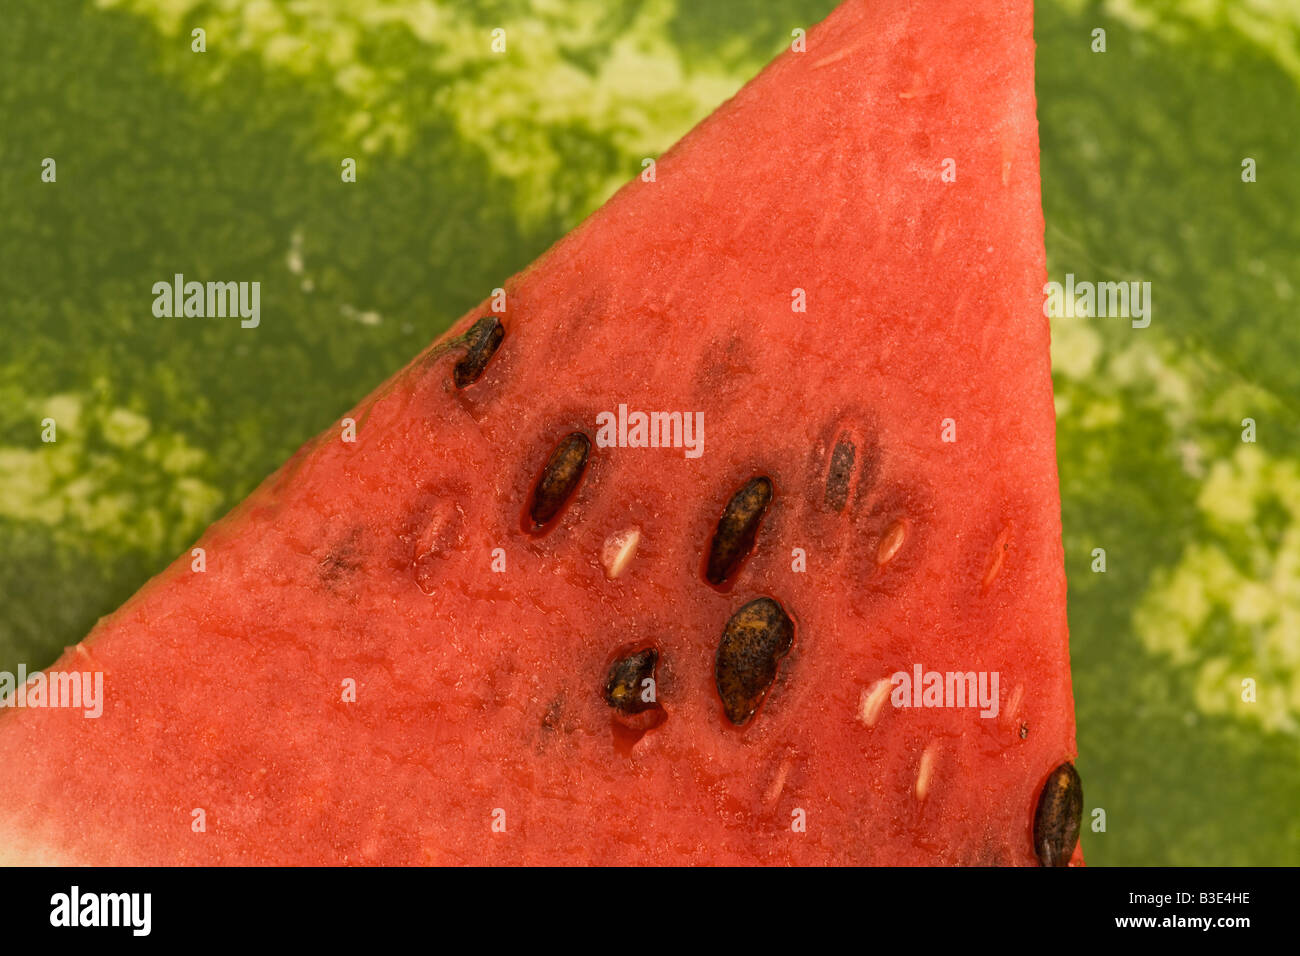 Slice juicy red ripe watermelon. Stock Photo